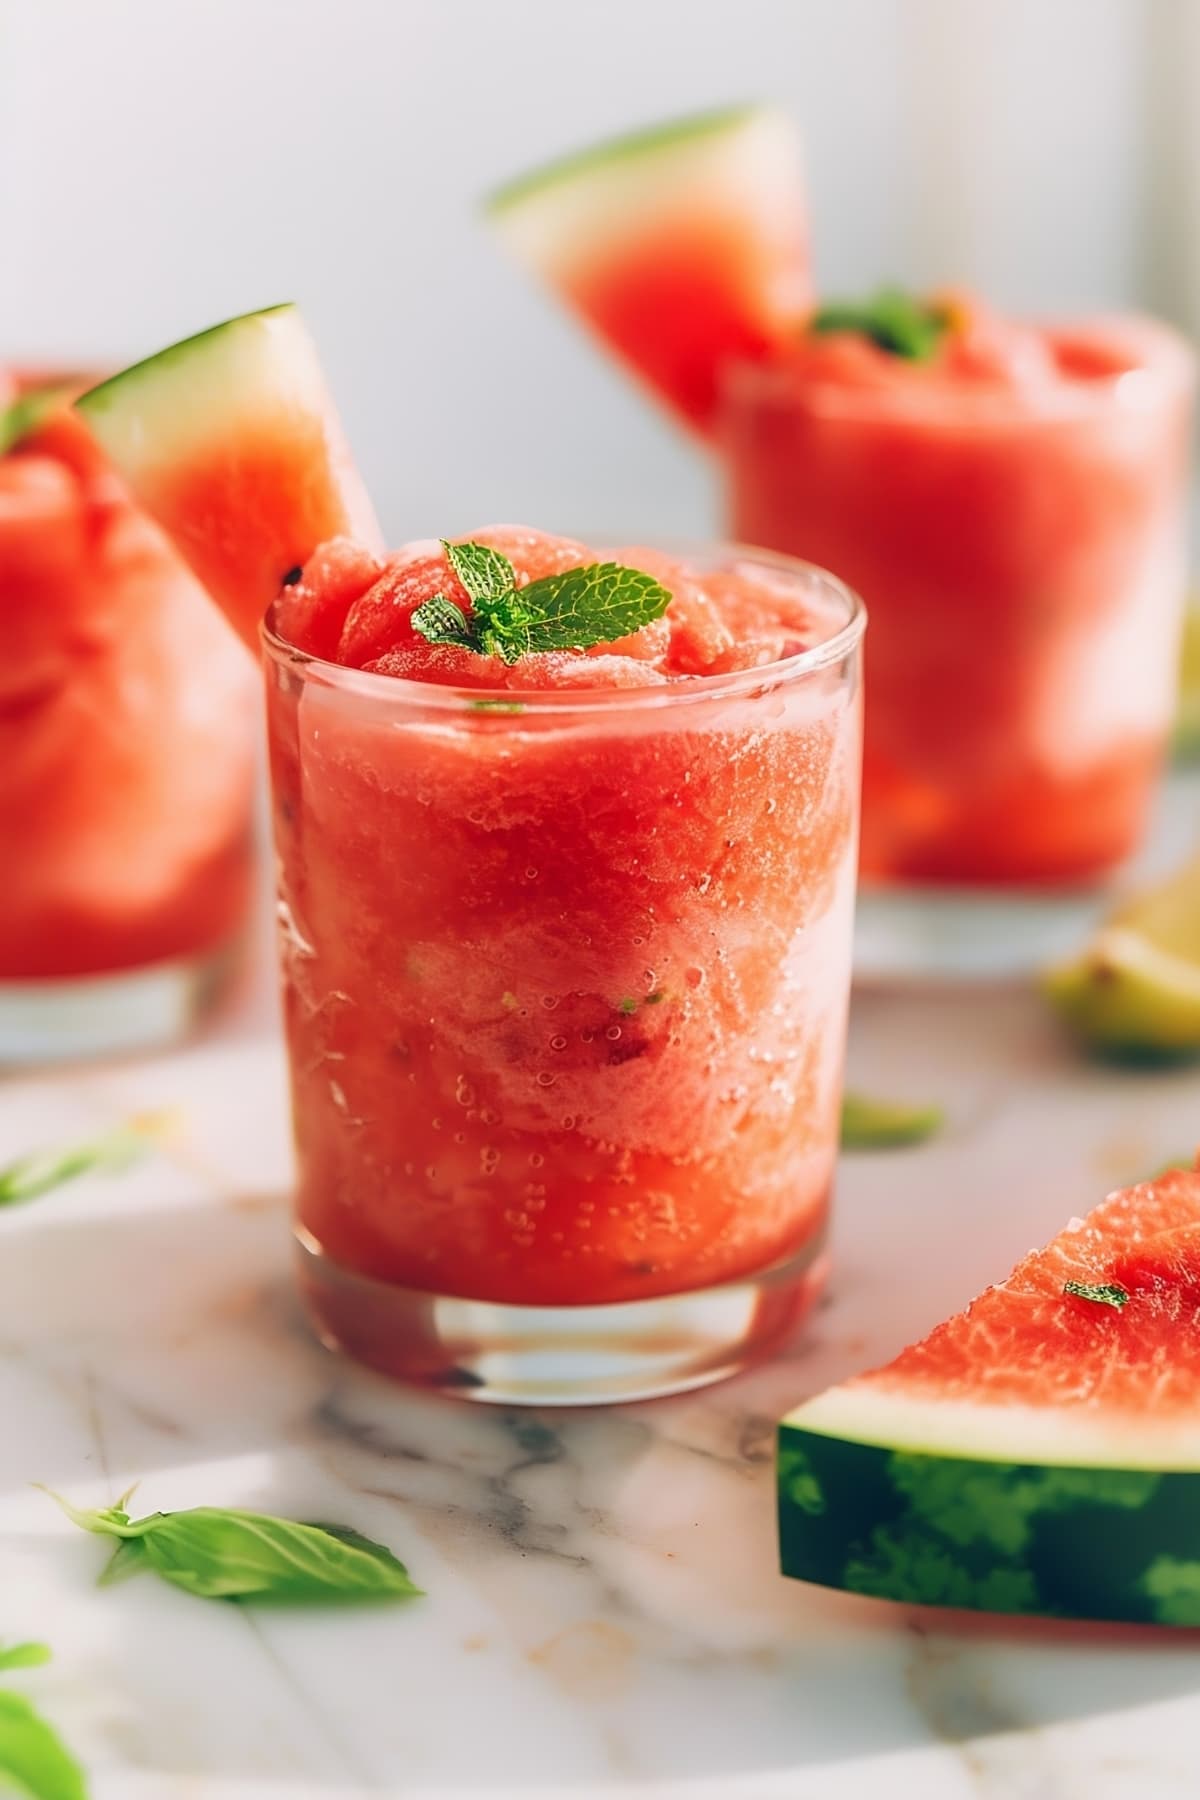 Homemade cool, sweet and refreshing watermelon slushie